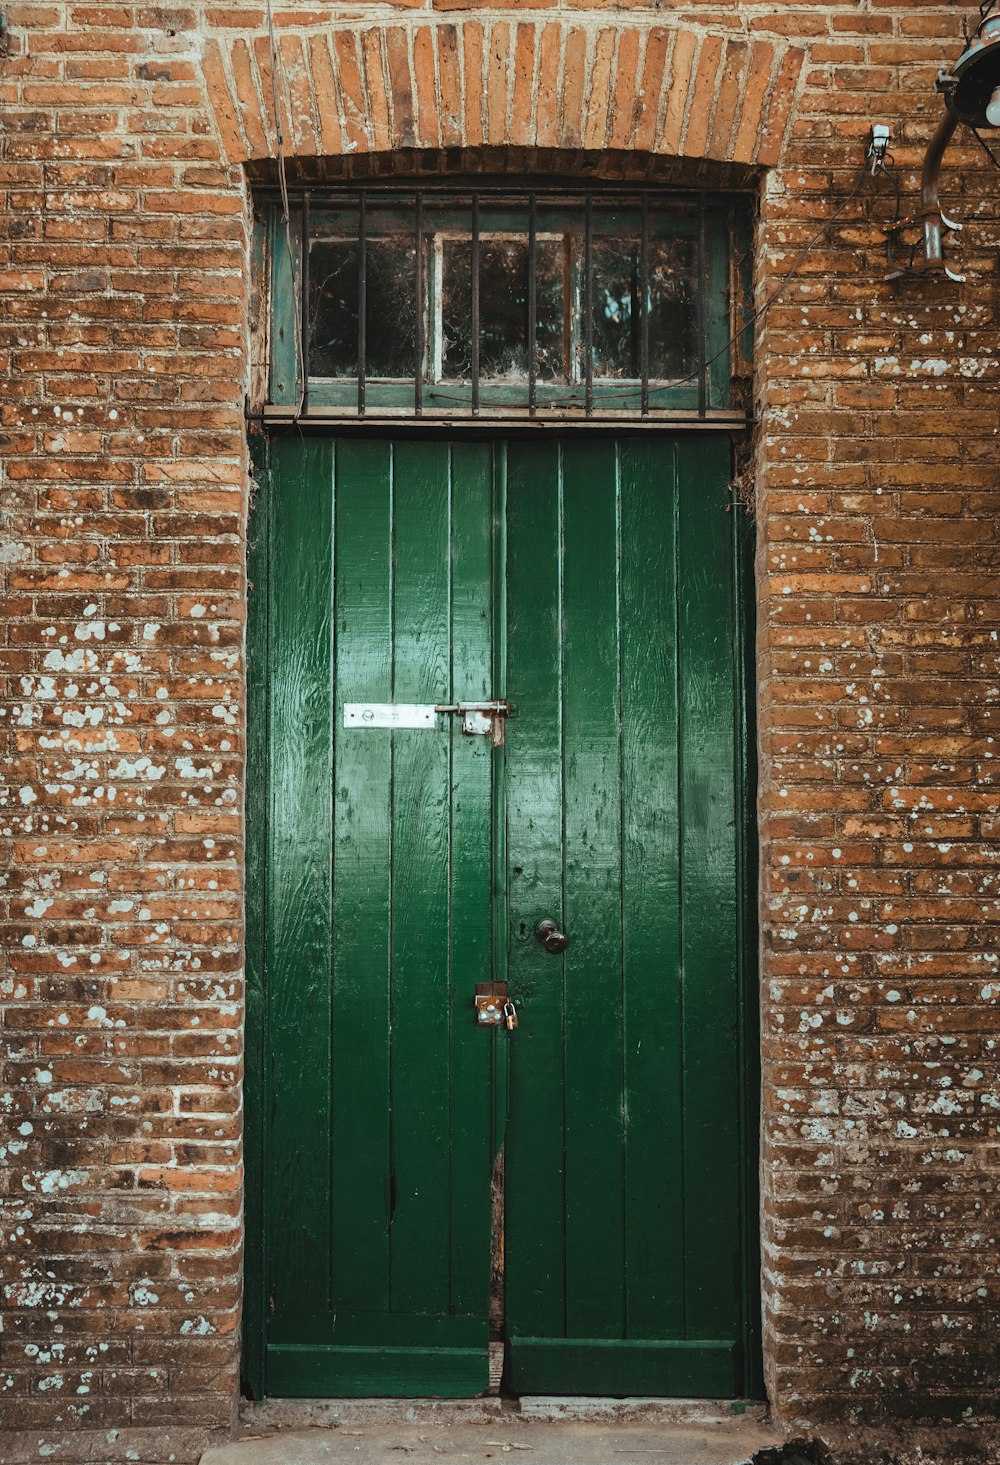 a green door in a brick building